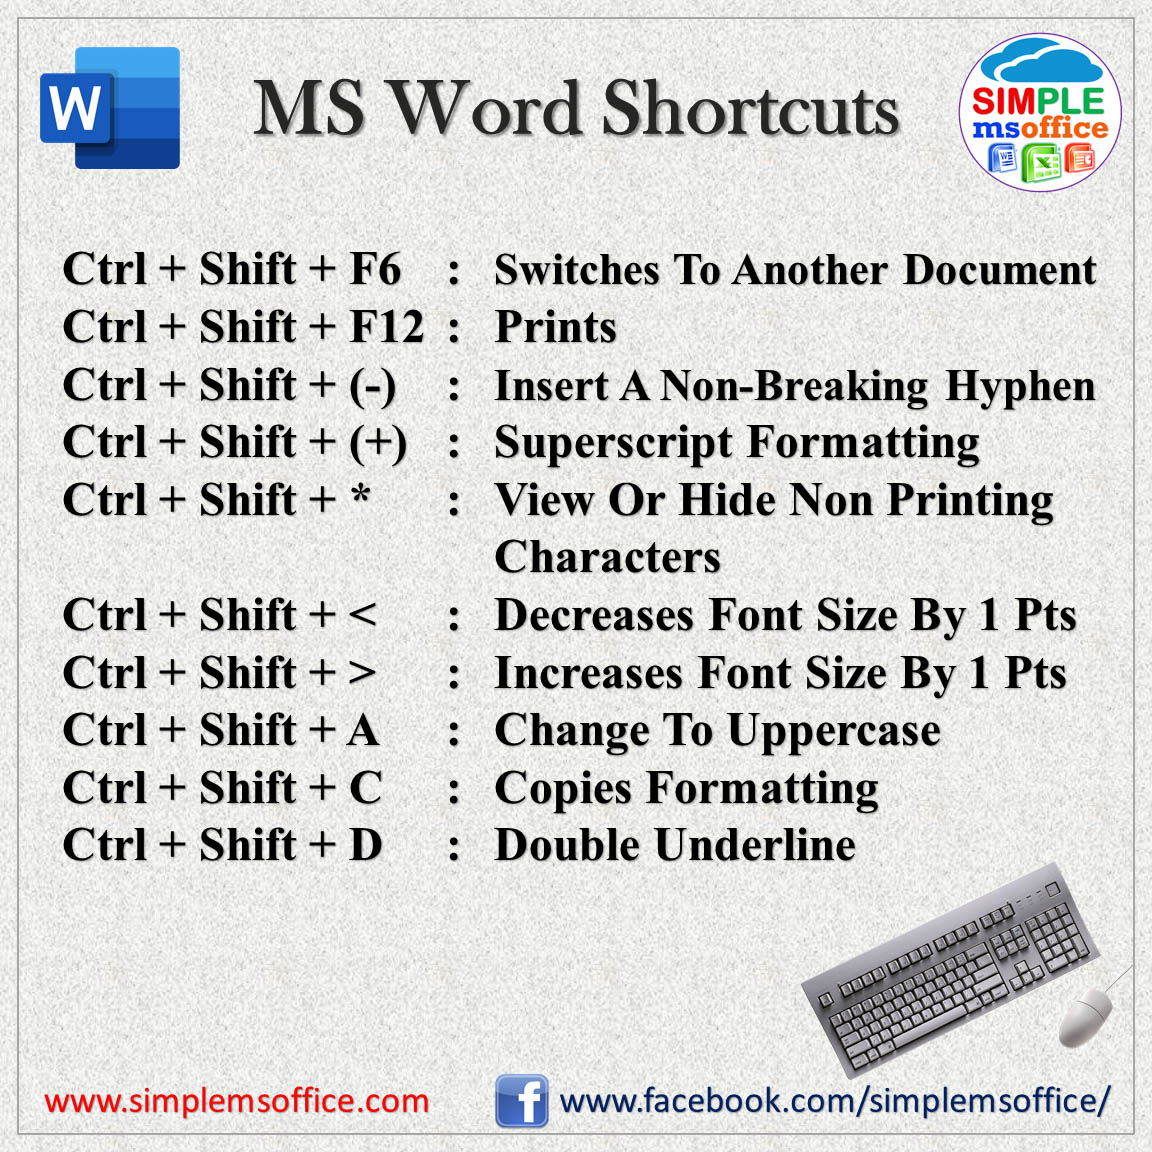 ms-word-shortcuts-12-simplemsoffice